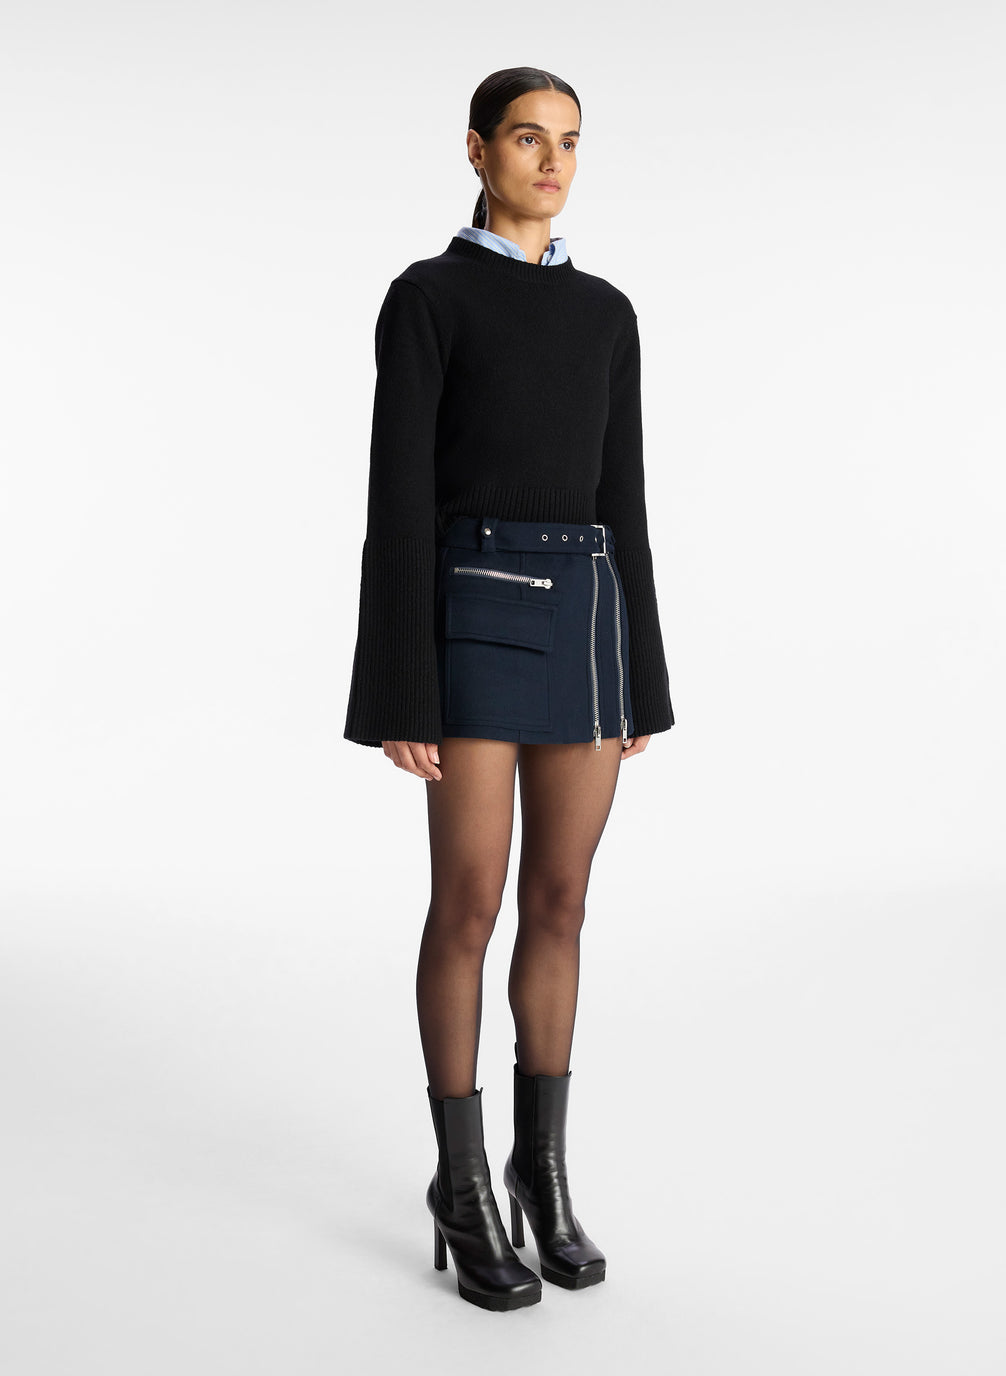 Christian Wool Mini Skirt